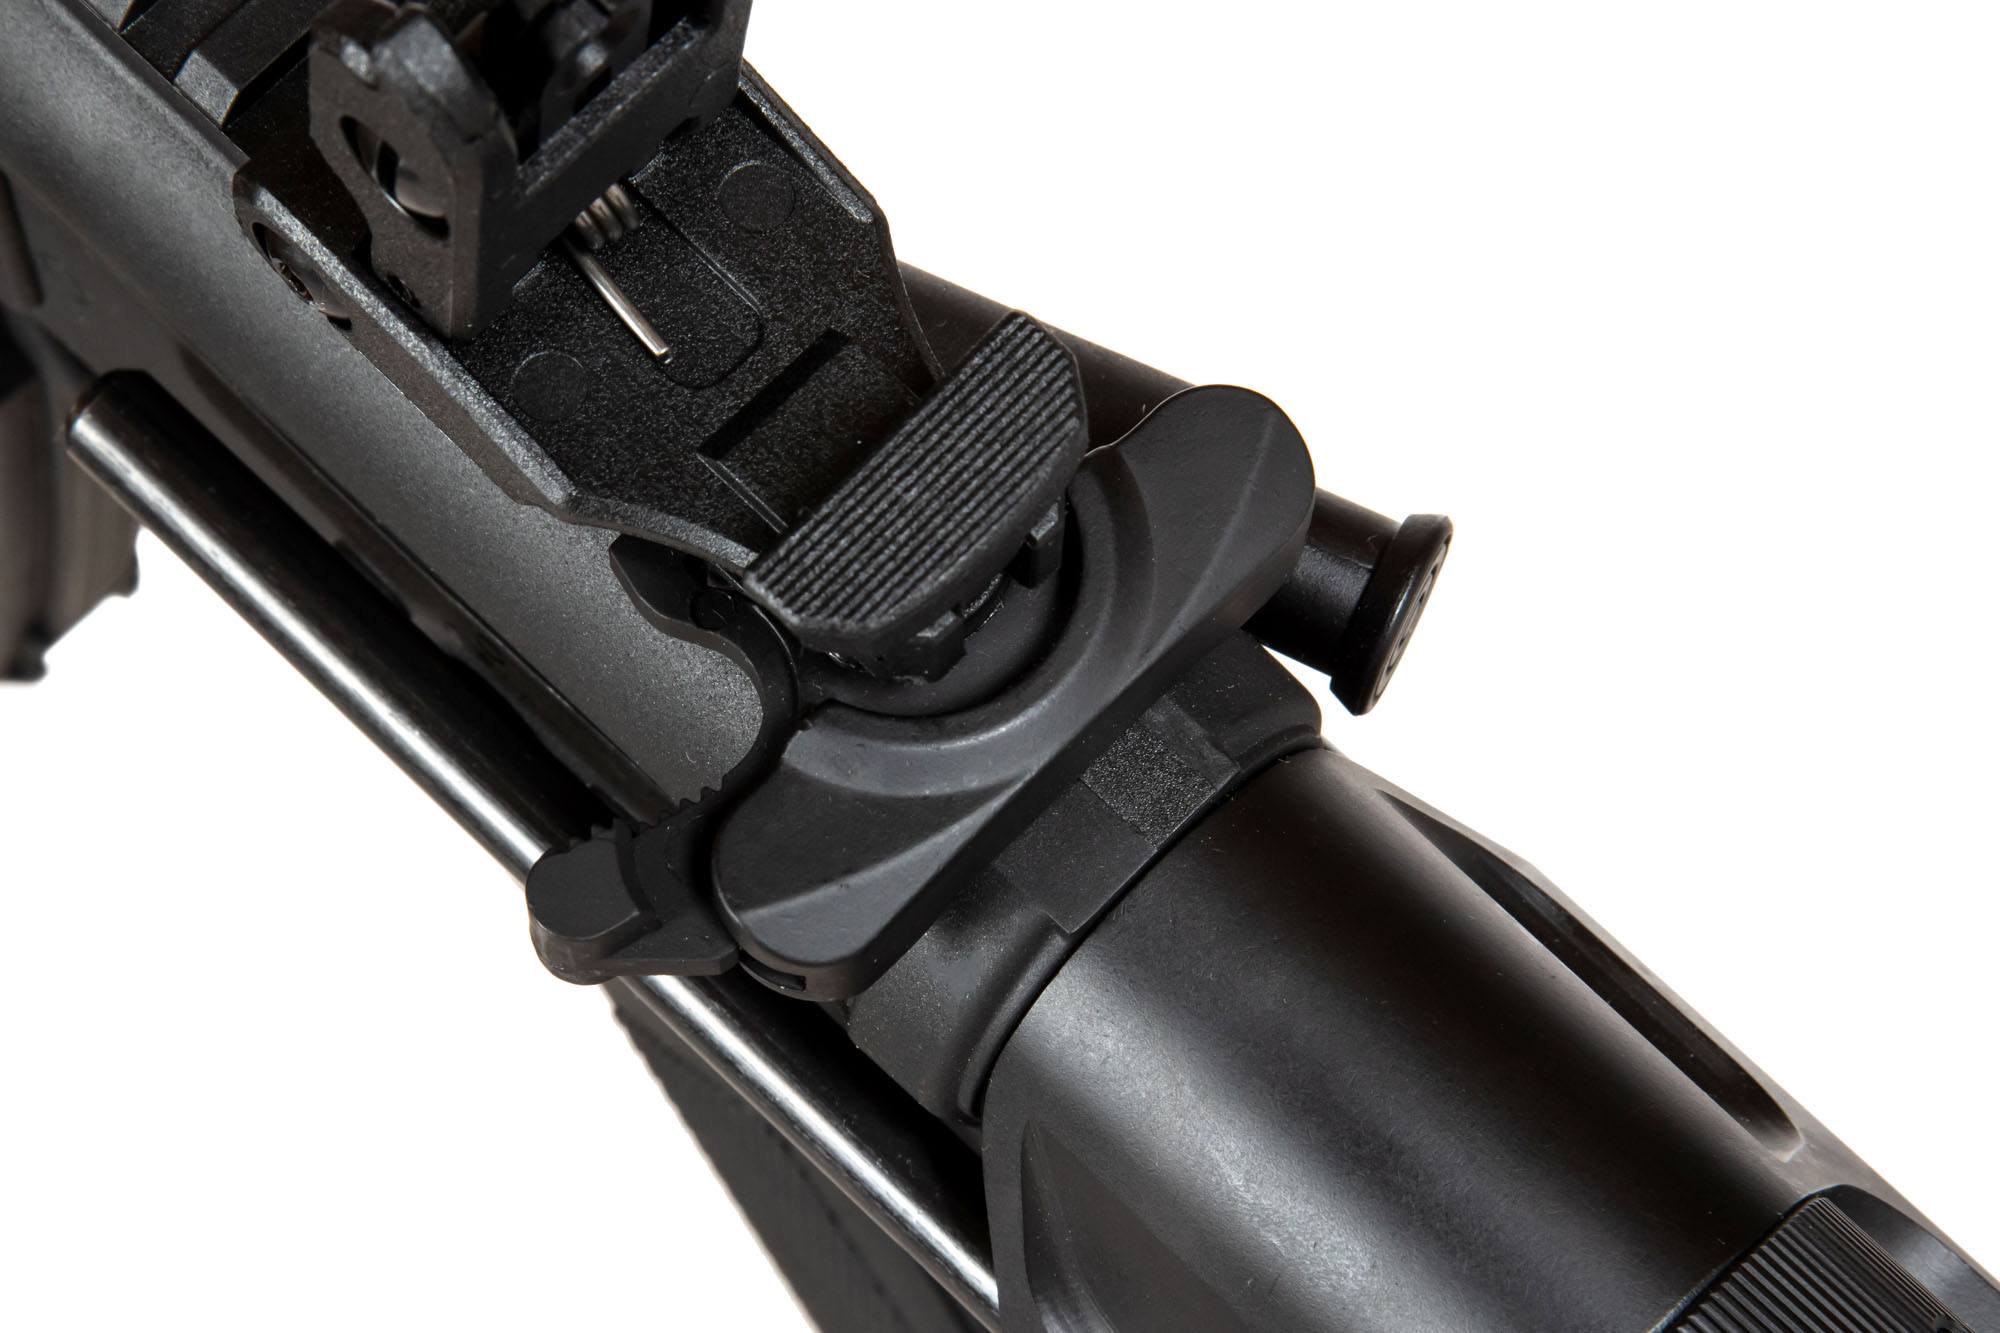 SA-C12 PDW CORE™ Carbine - black